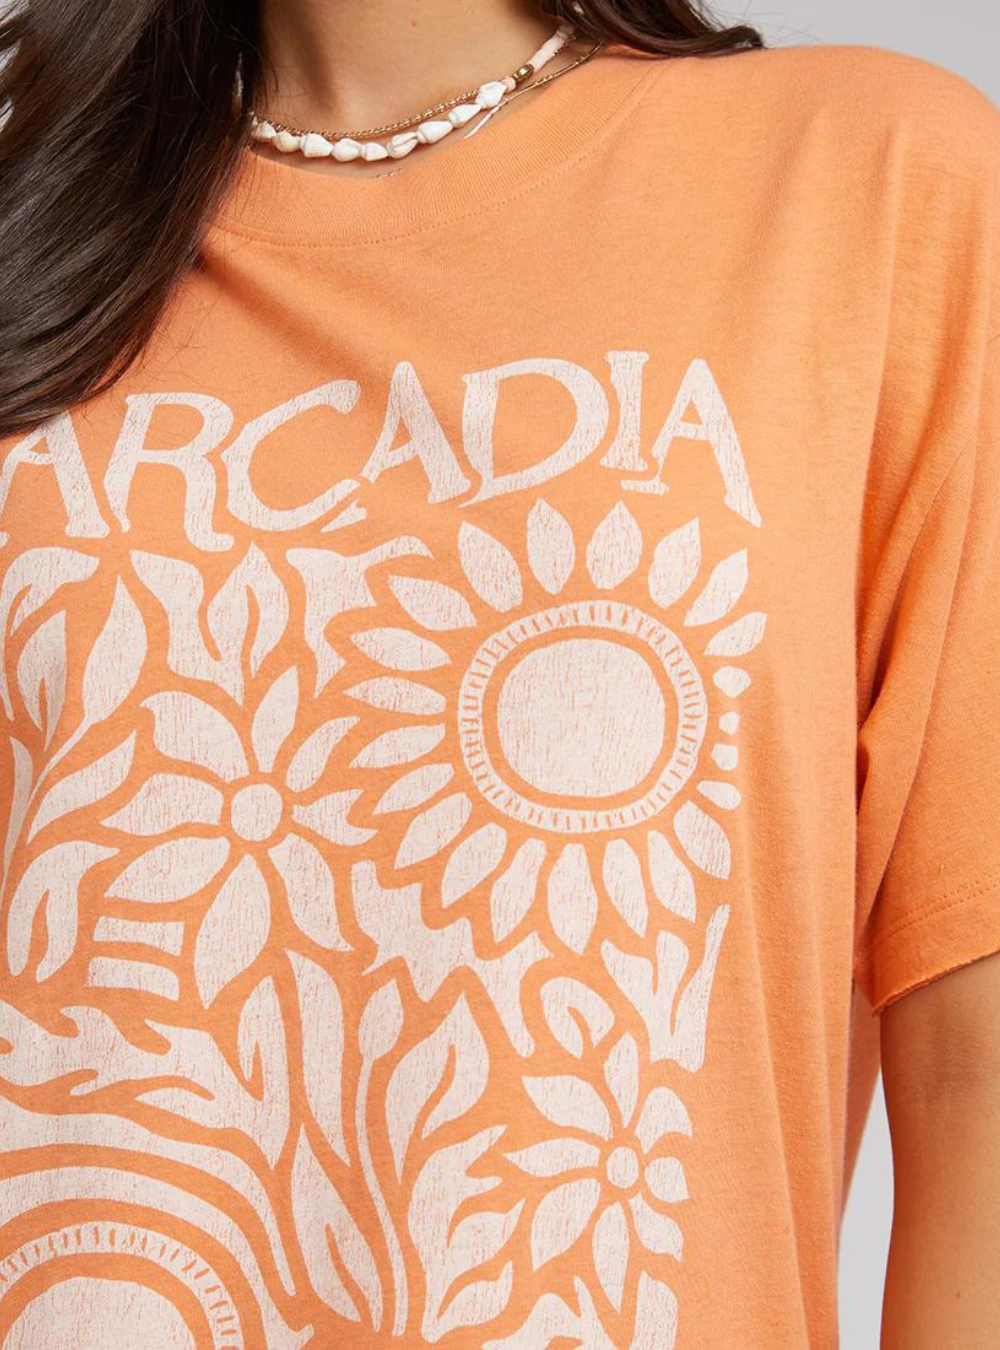 Arcadia Tee - Peach